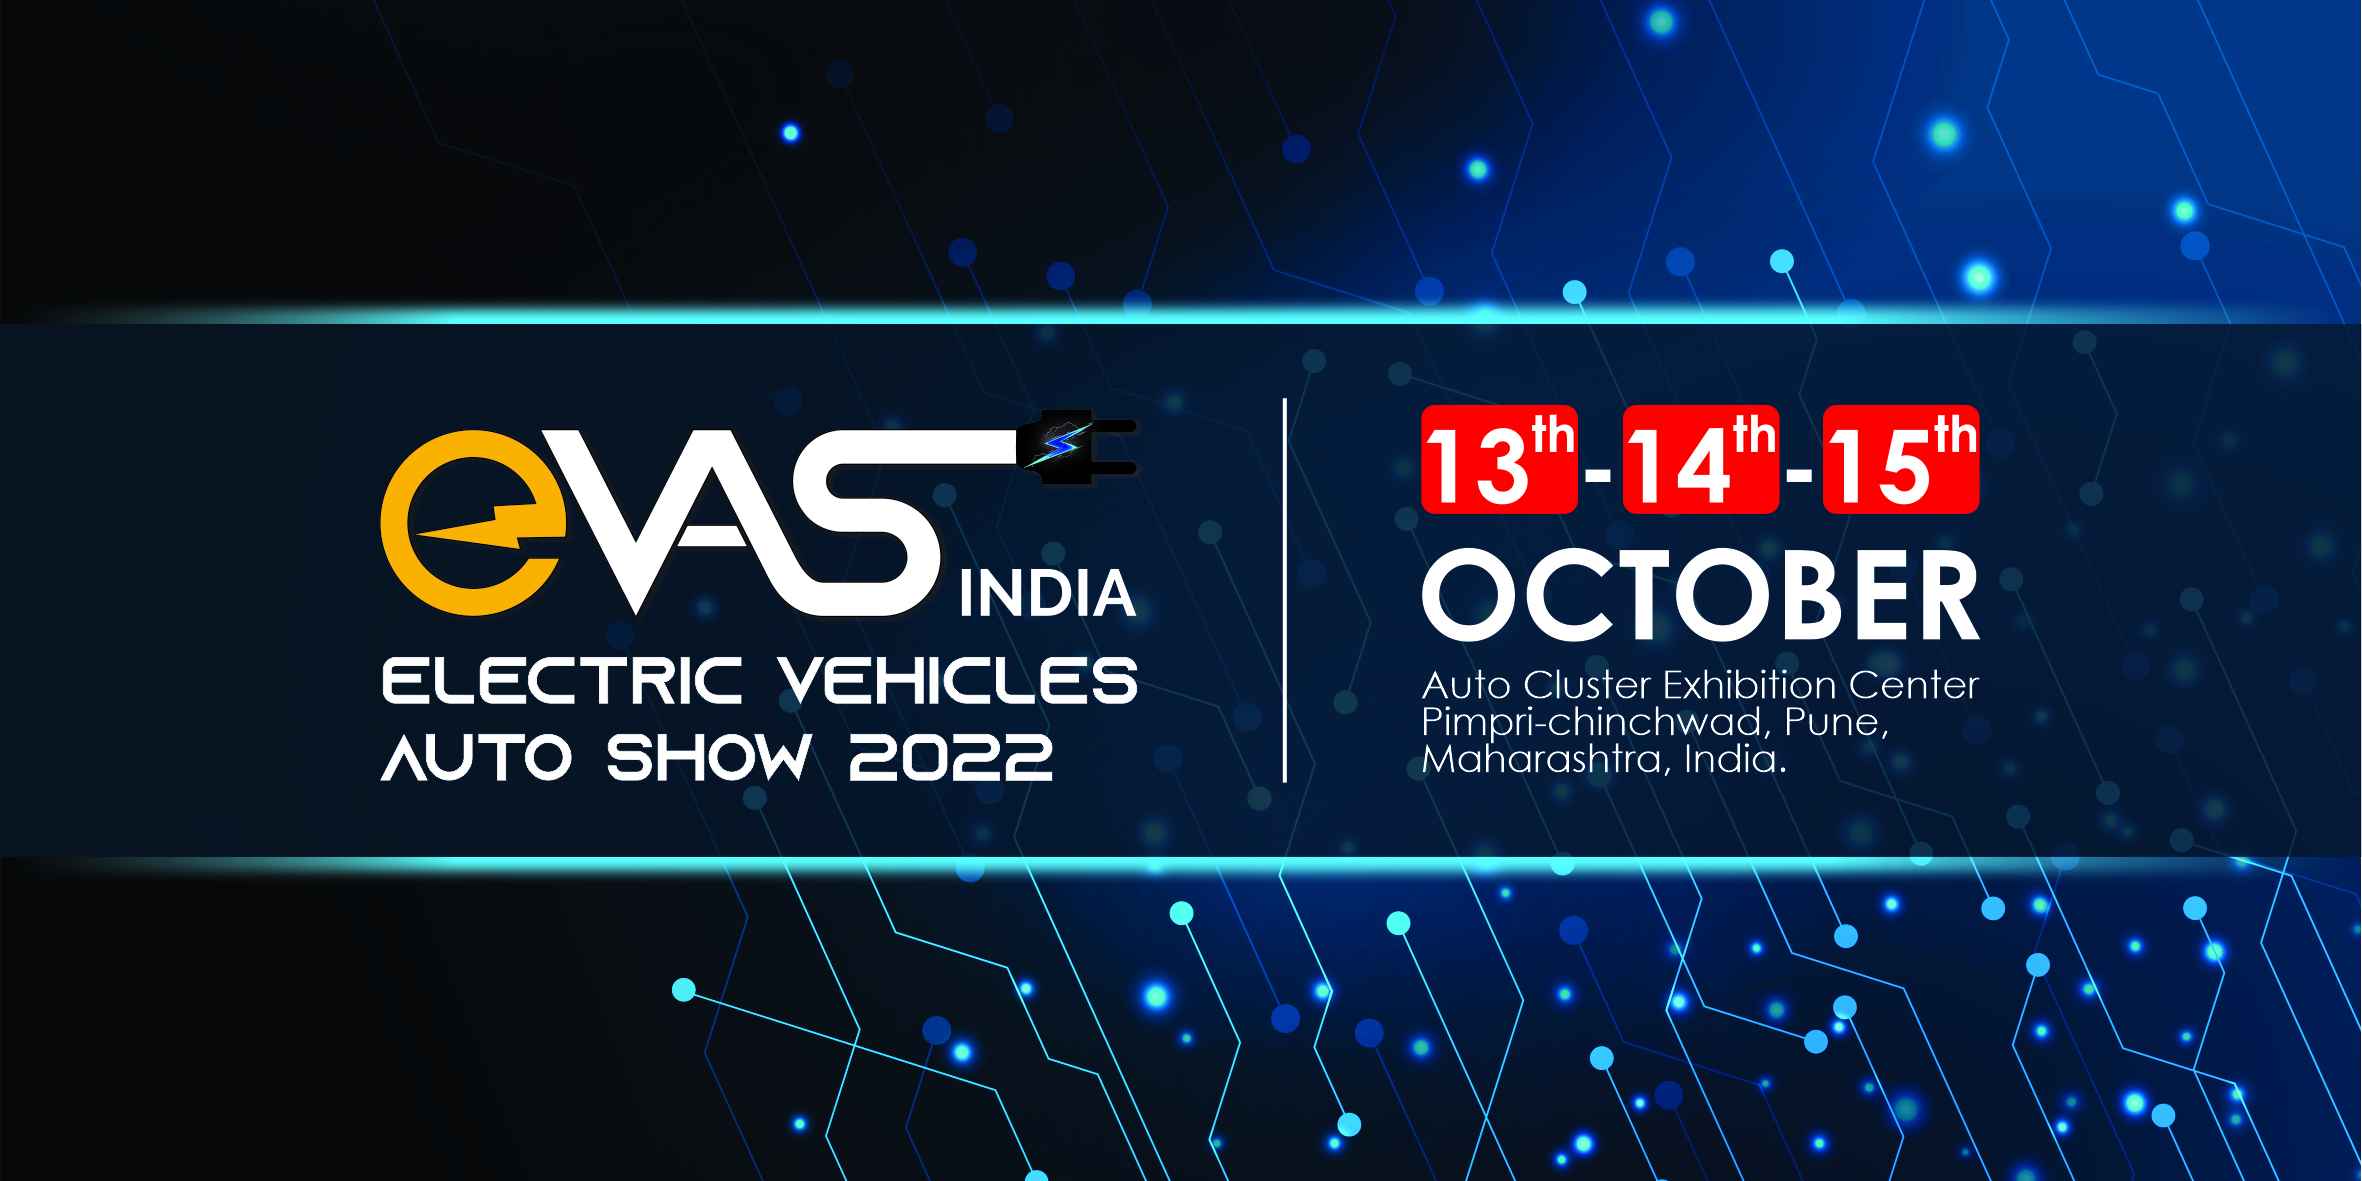 EVAS  Electric Vehicles Auto Show 2022, Pune, Maharashtra, India